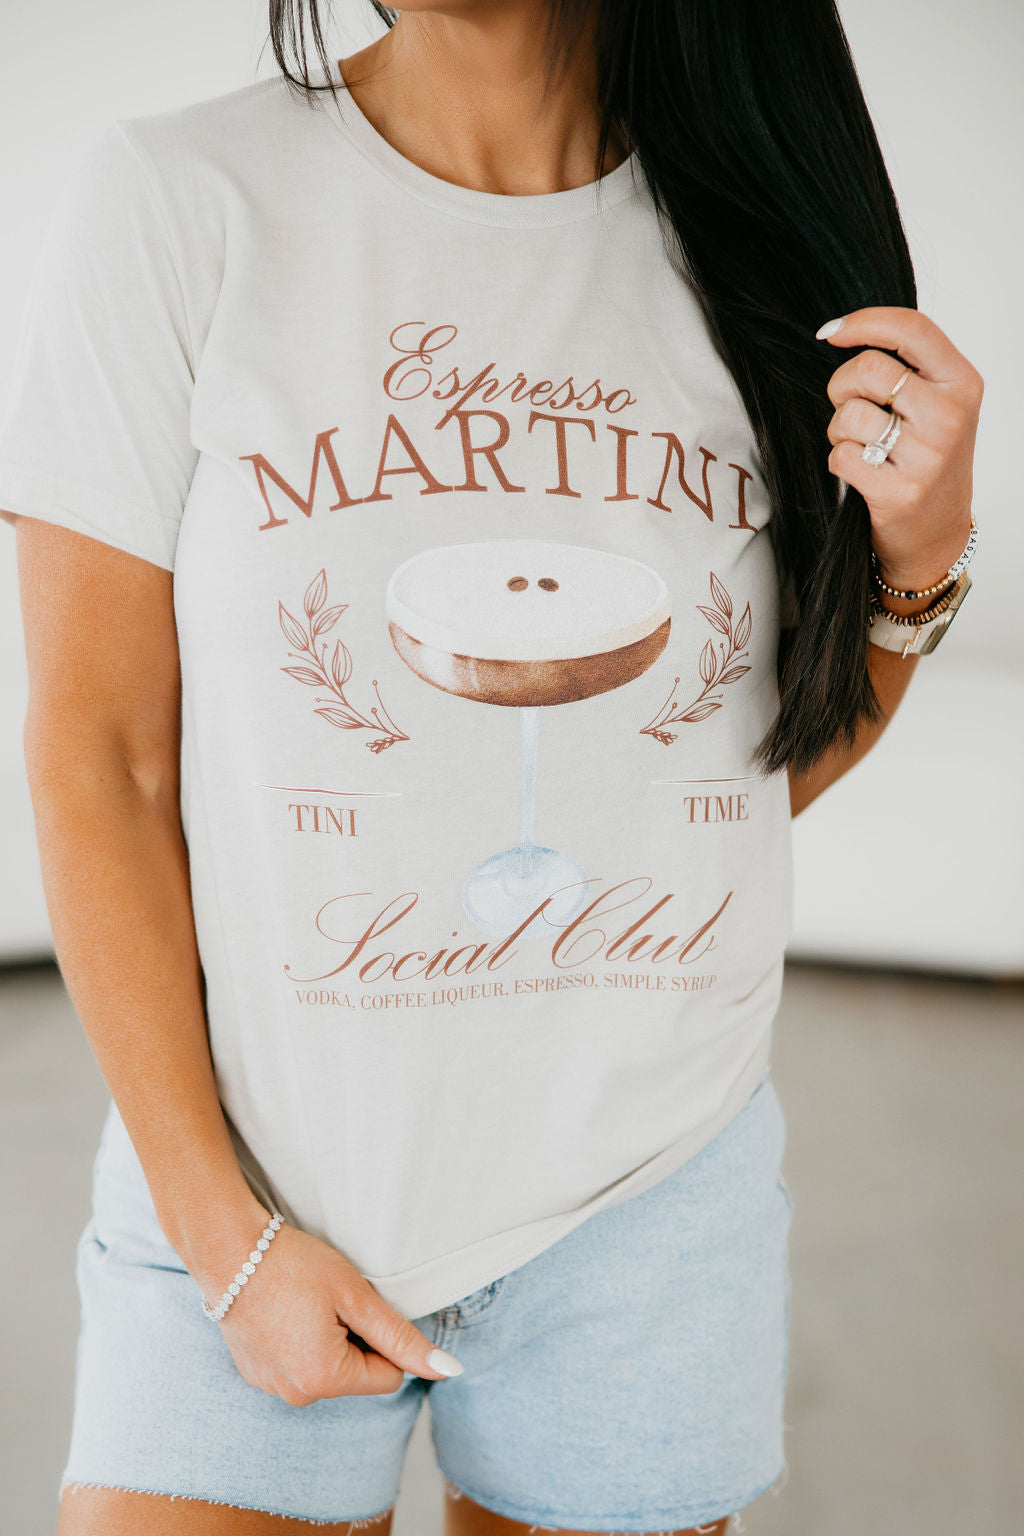 image of Espresso Martini Social Club Tee